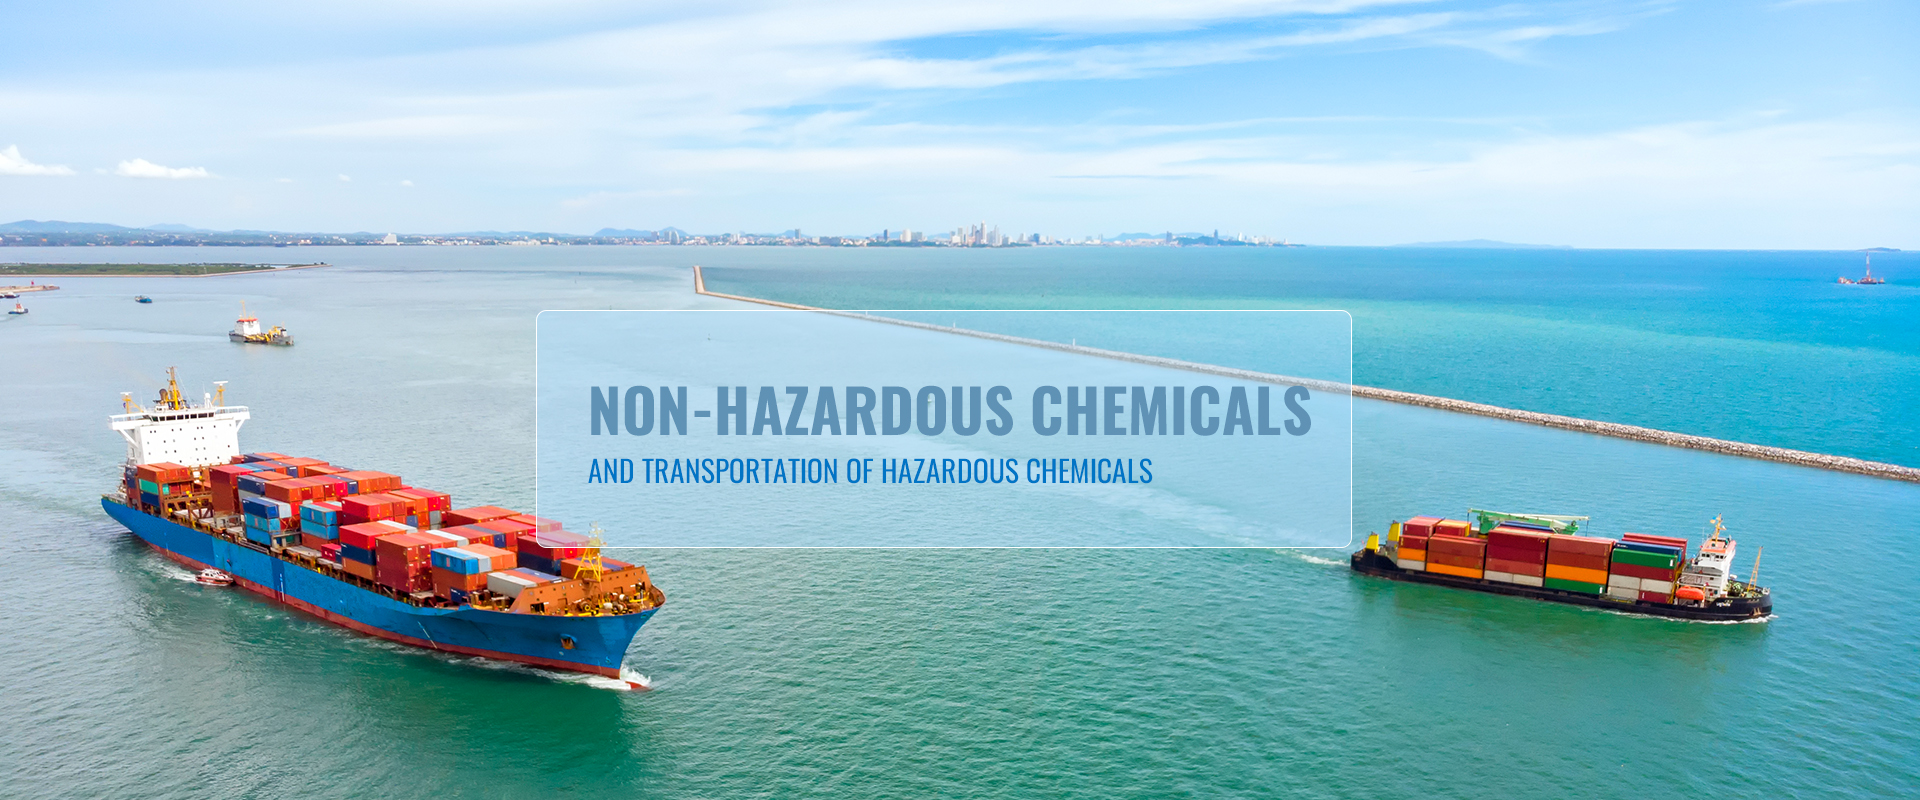  transportation of hazardous chemicals and non-hazardous goods